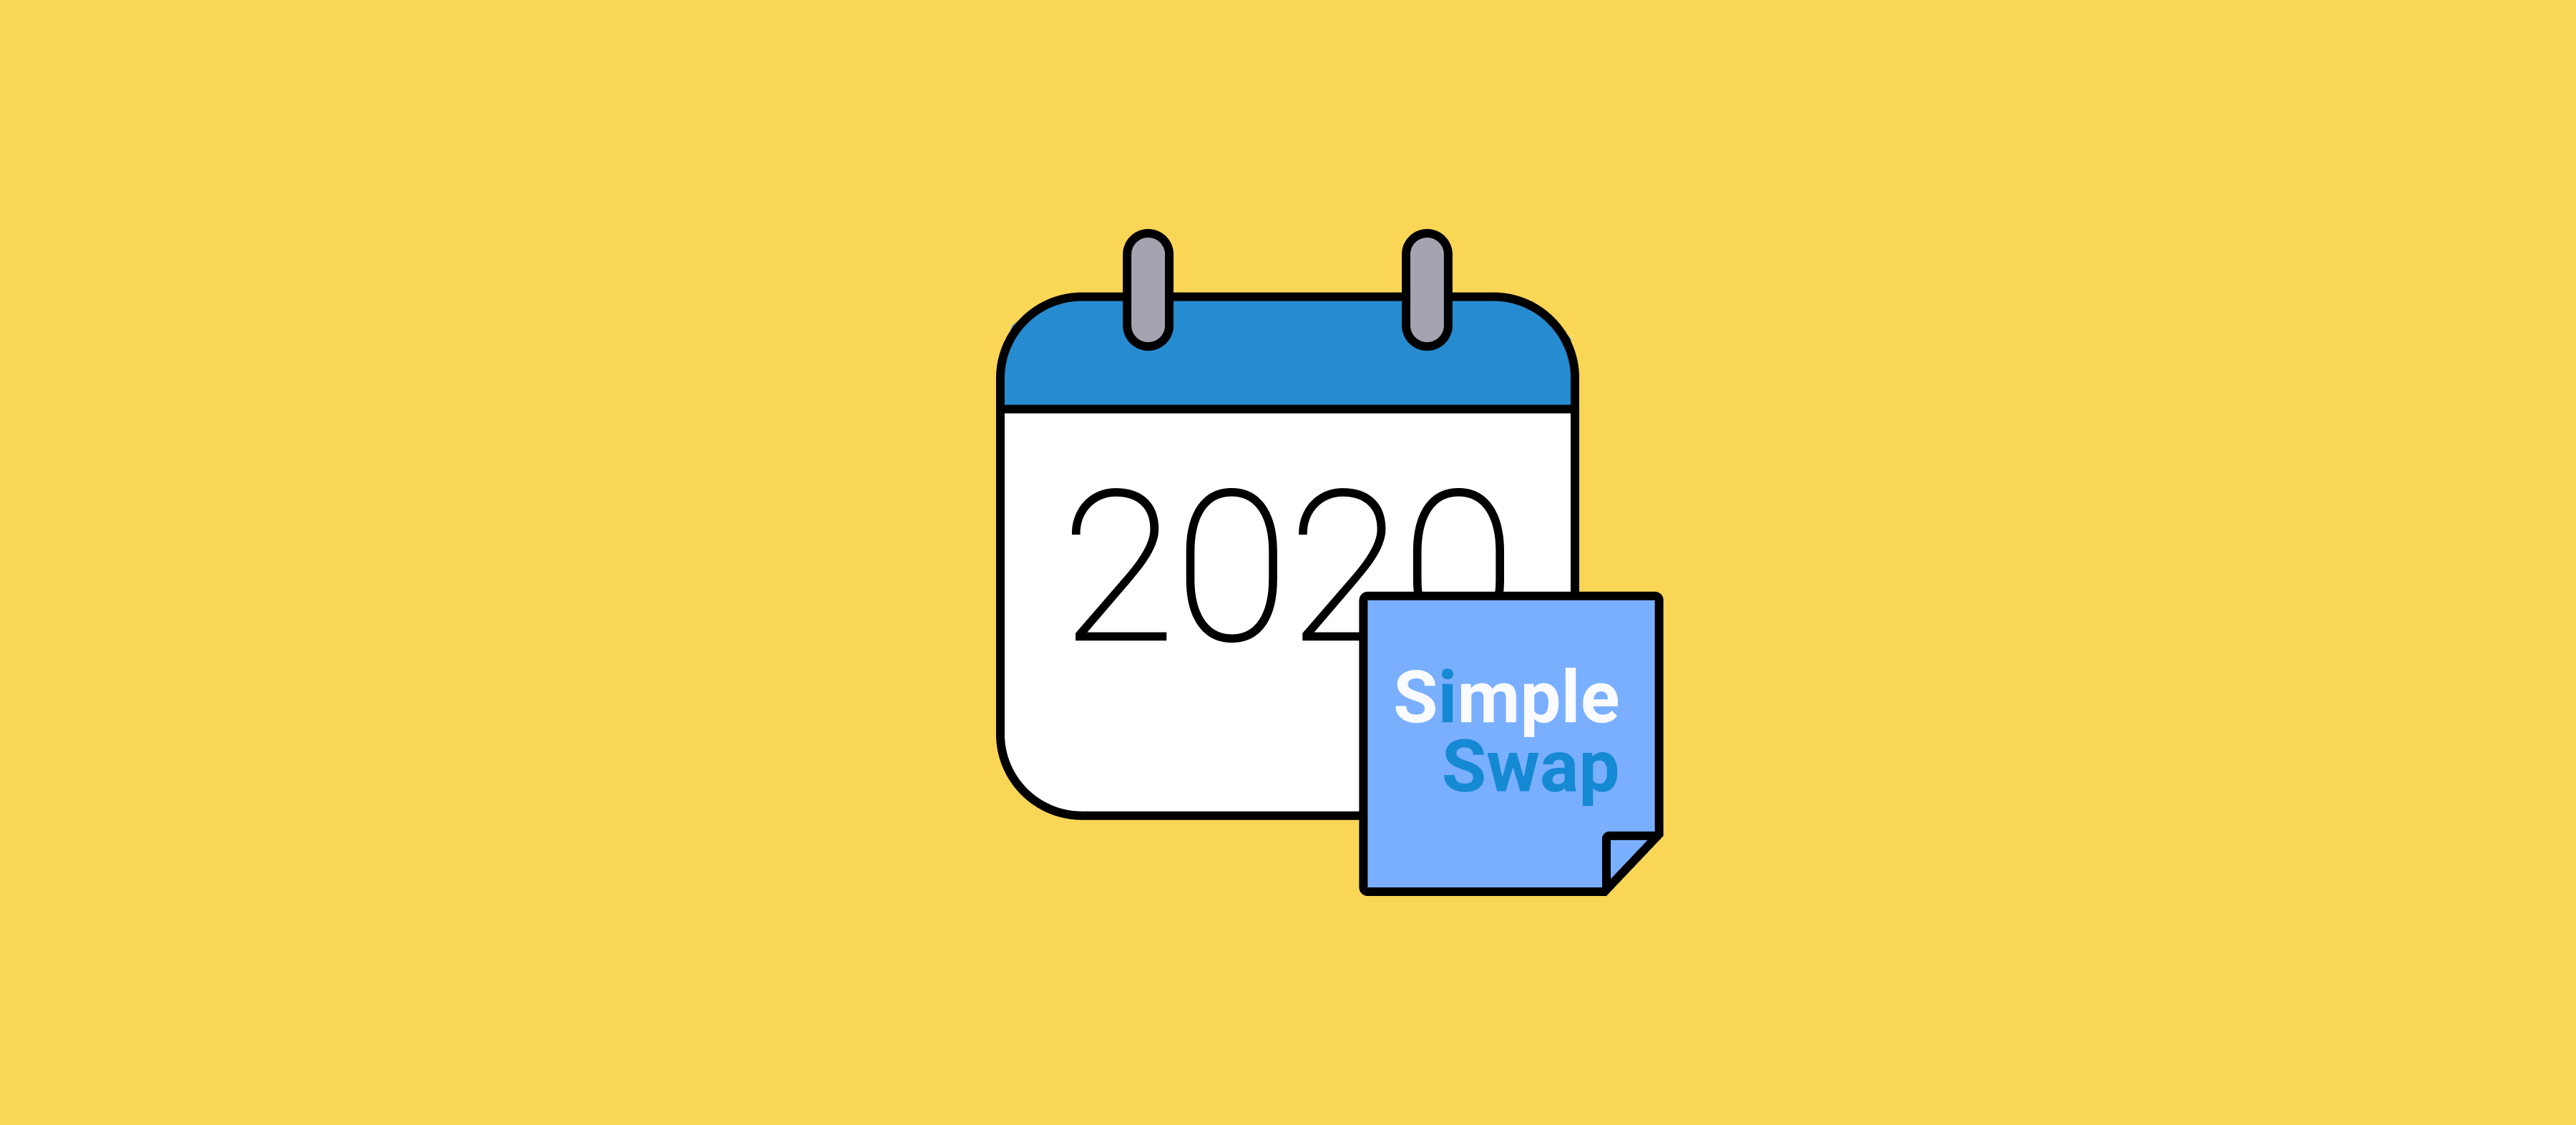 SimpleSwap 2020